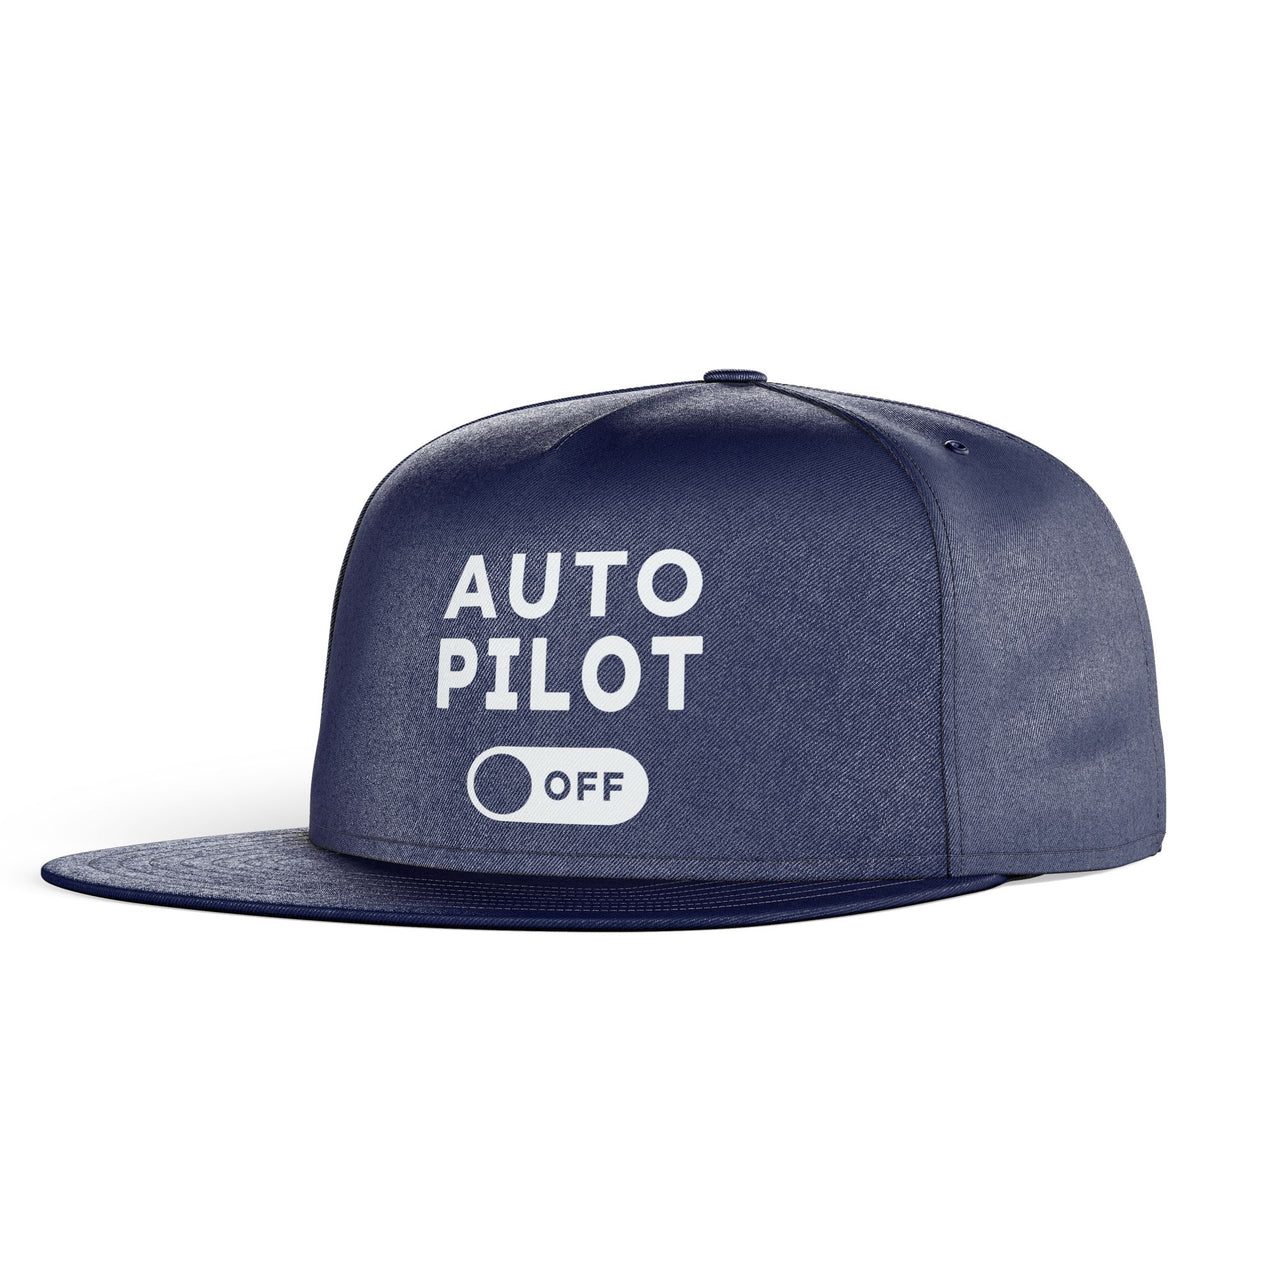 Auto Pilot Off Designed Snapback Caps & Hats